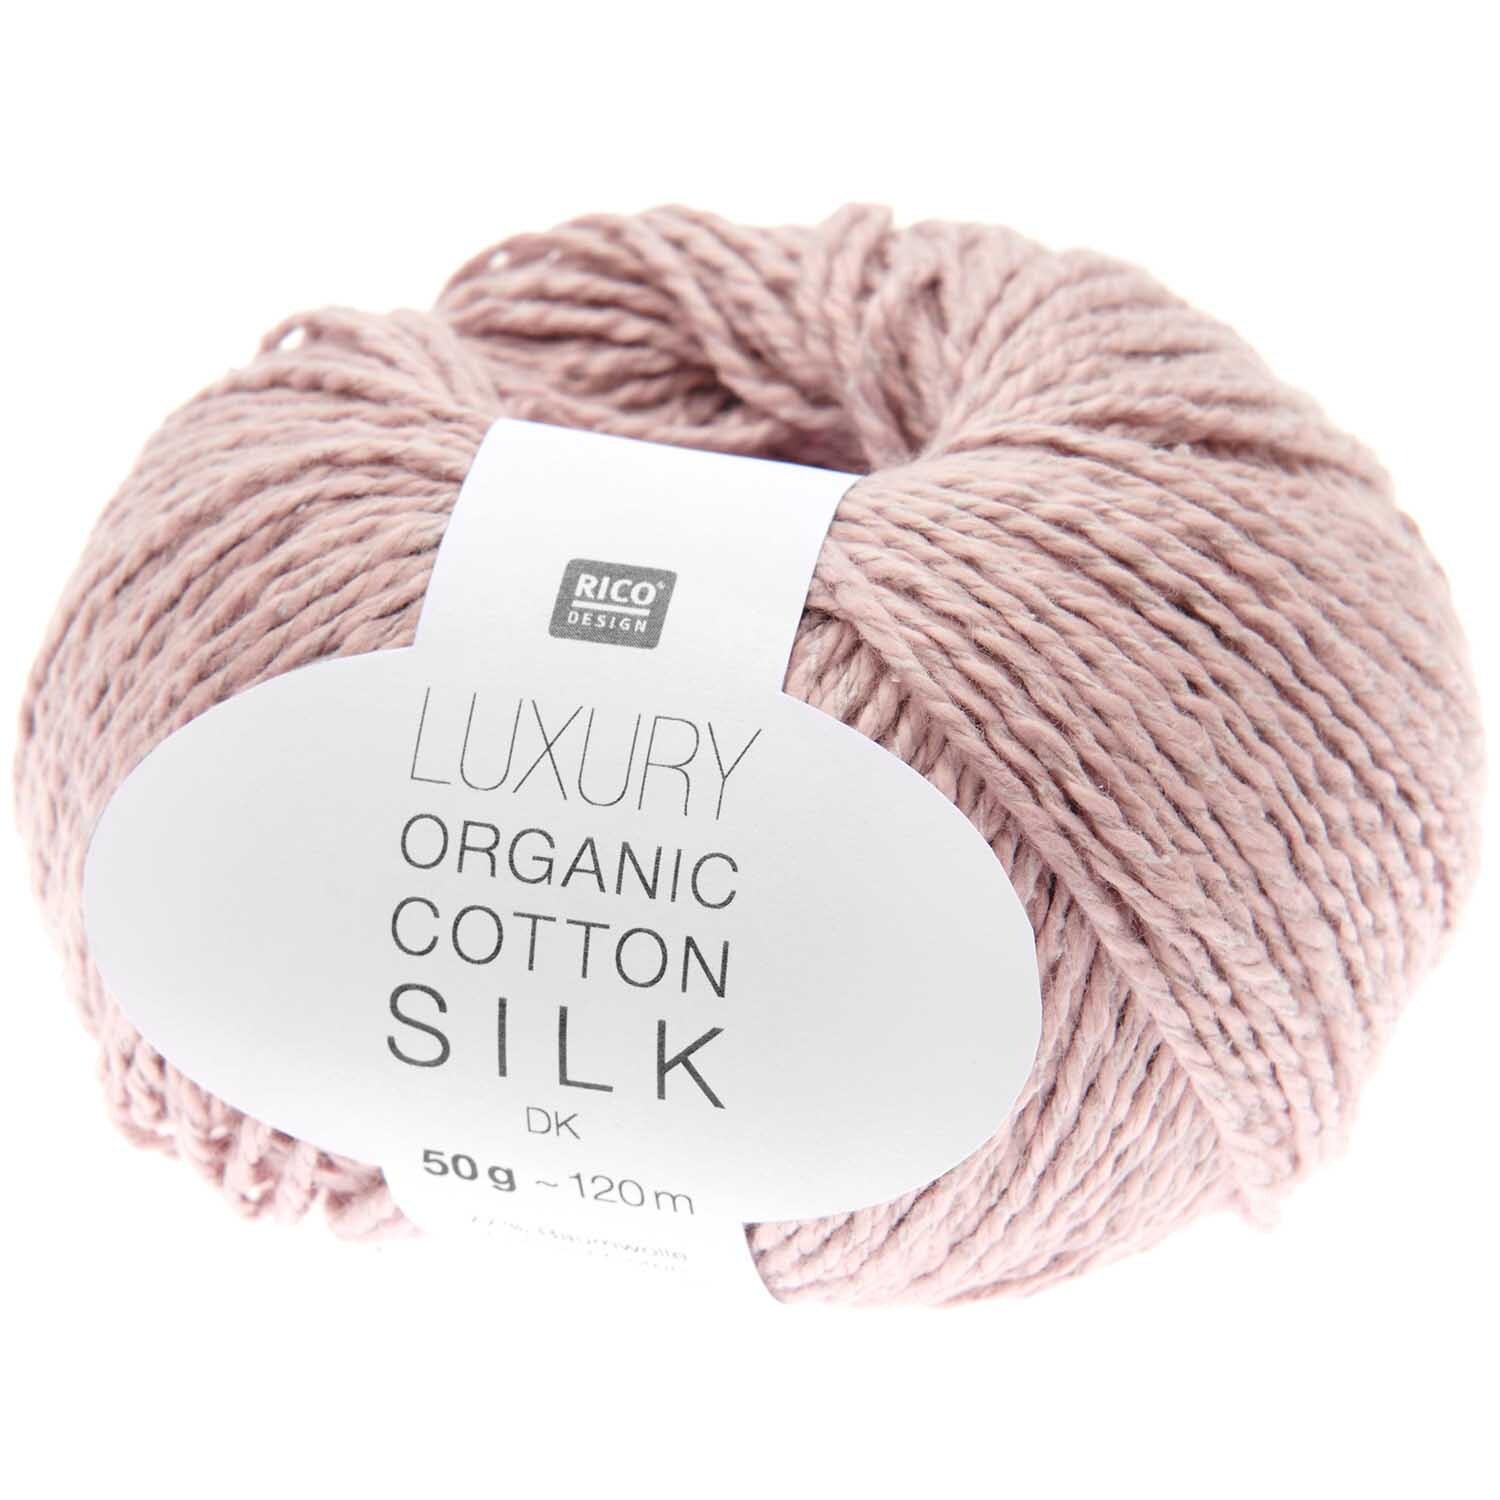 Luxury Organic Cotton Silk dk